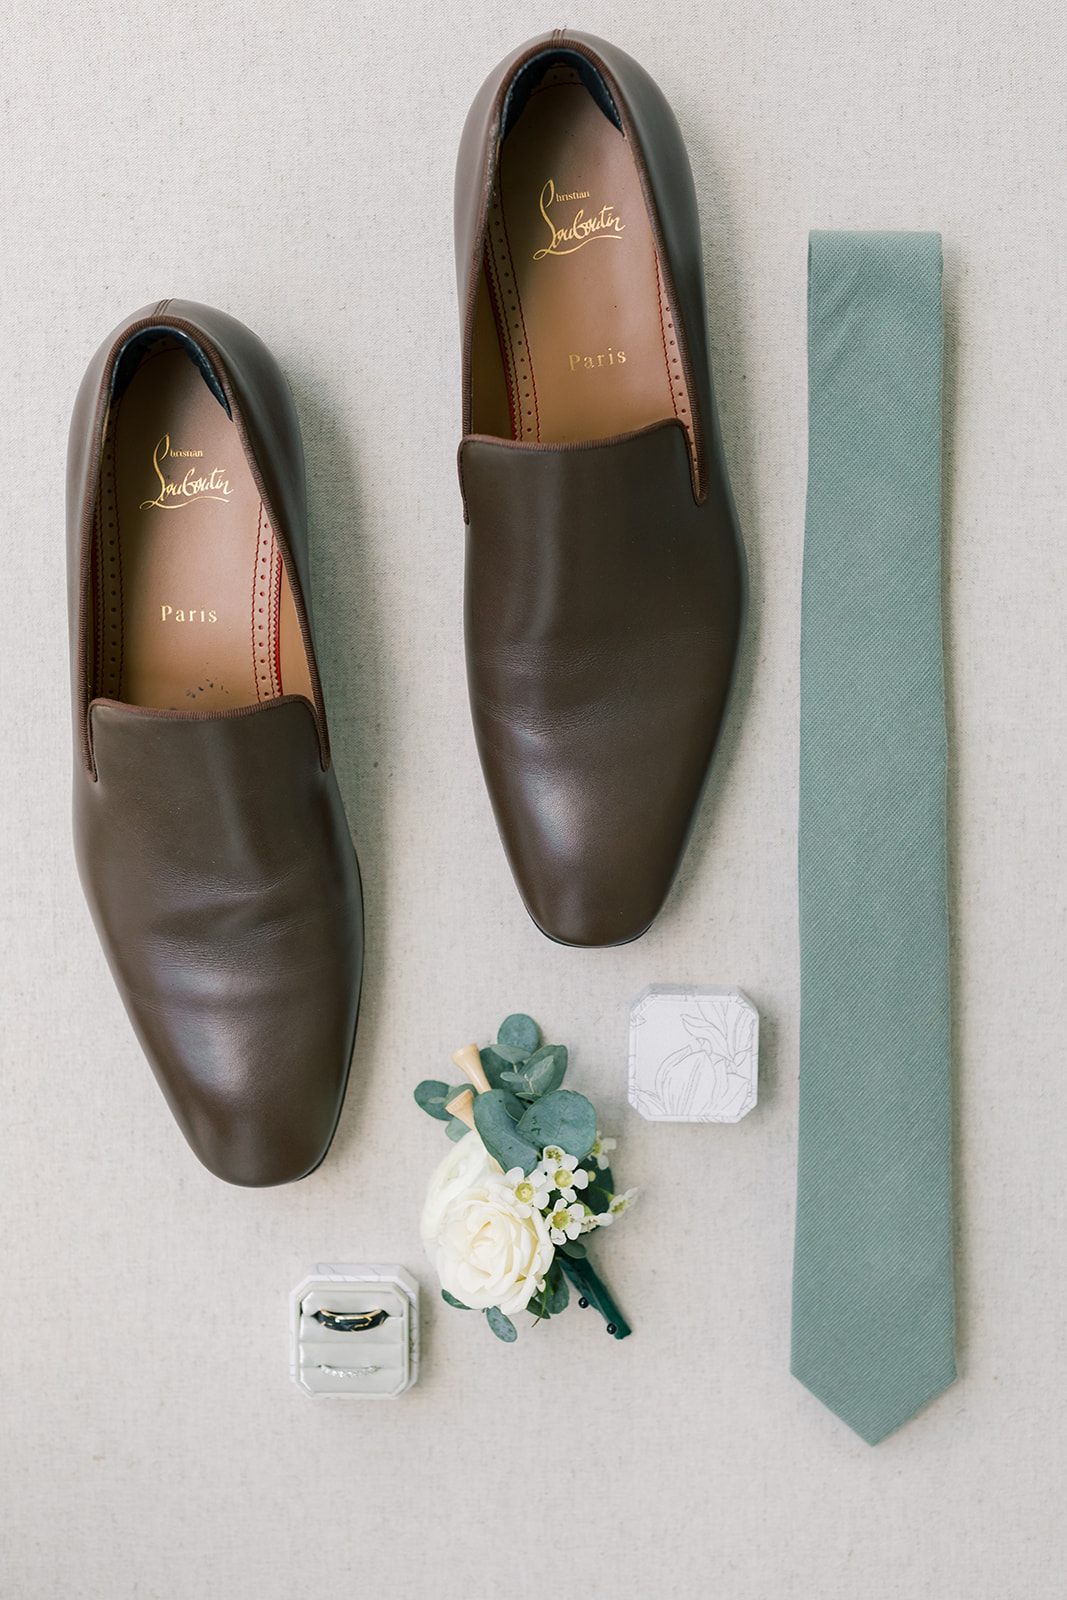 groom's Christian Louboutin wedding shoes